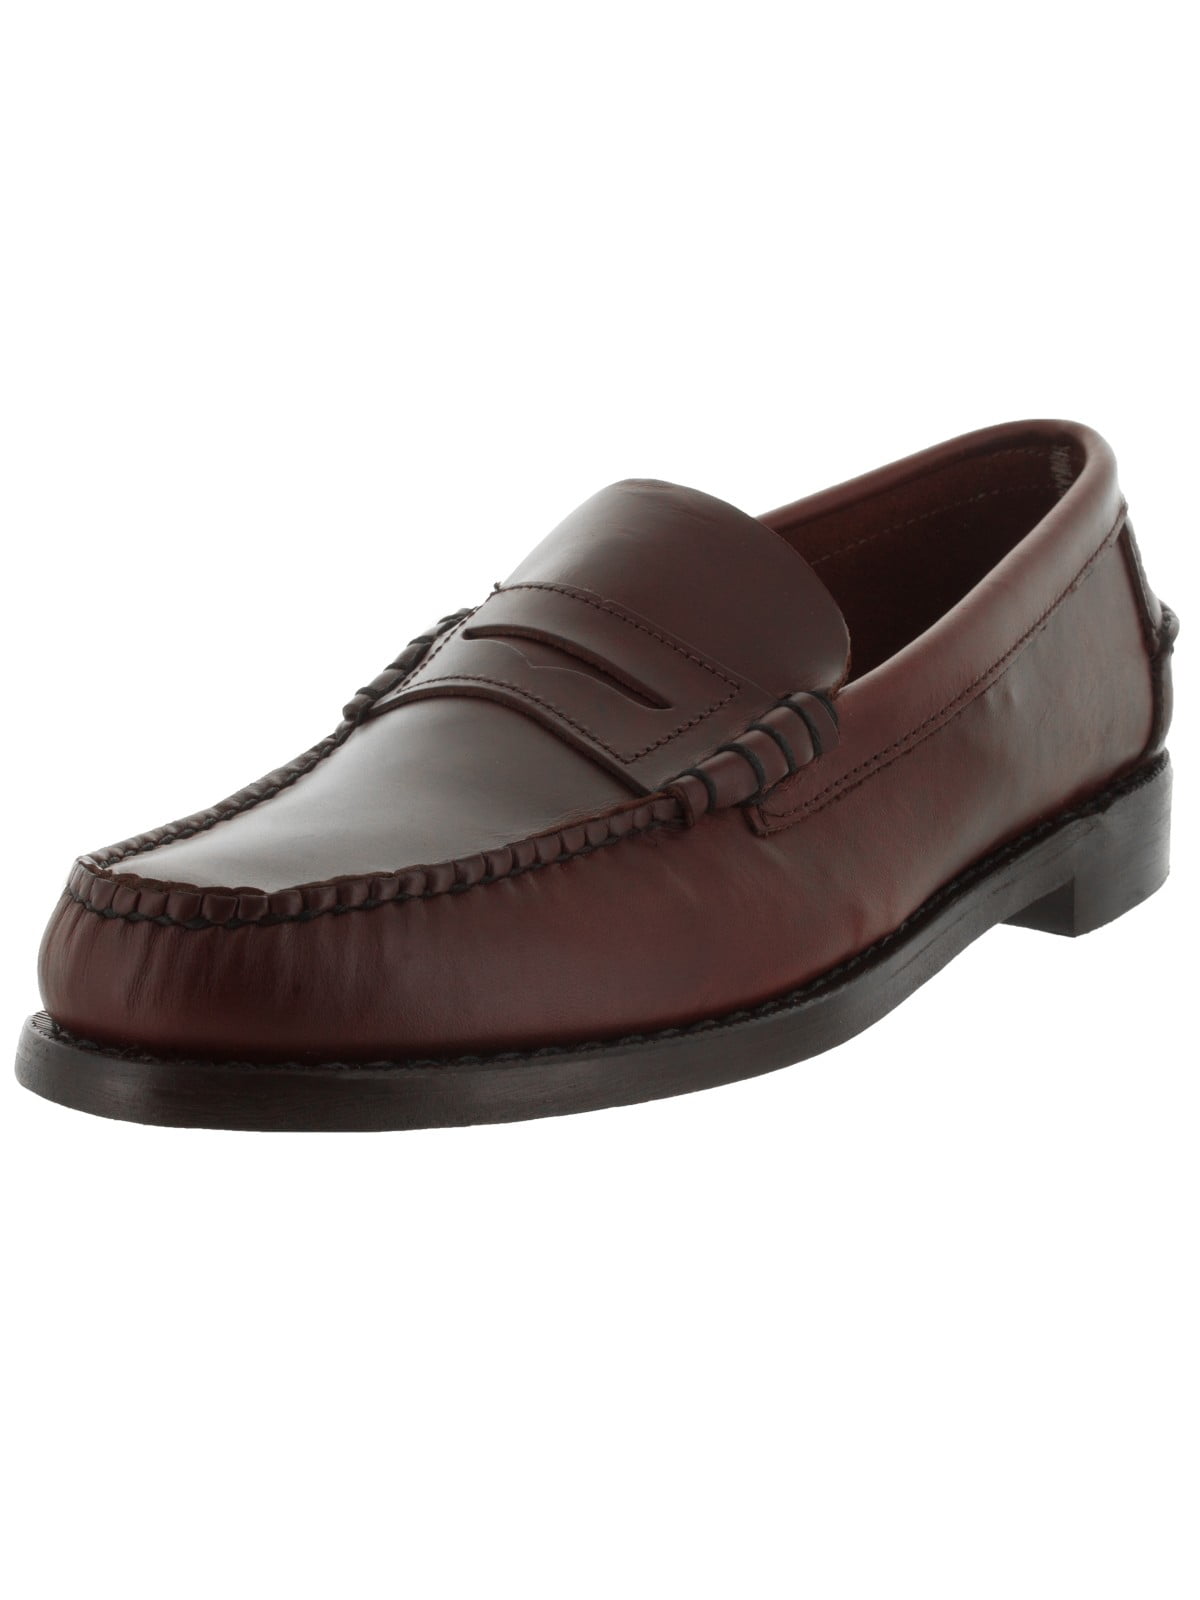 Sebago Men's Classic E Loafers & Slip-Ons Shoe - Walmart.com